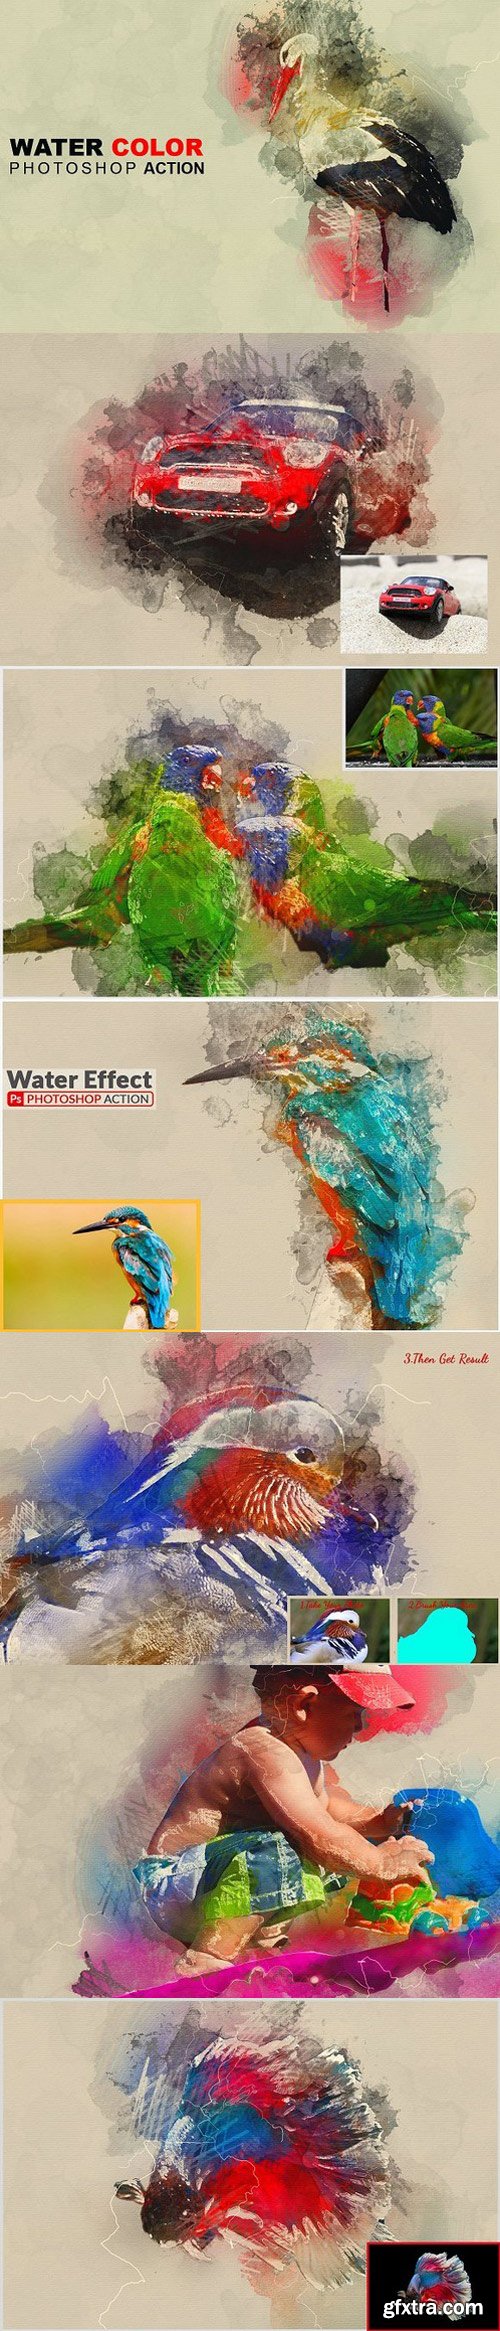 CM - Water Color Photoshop Action 1573158